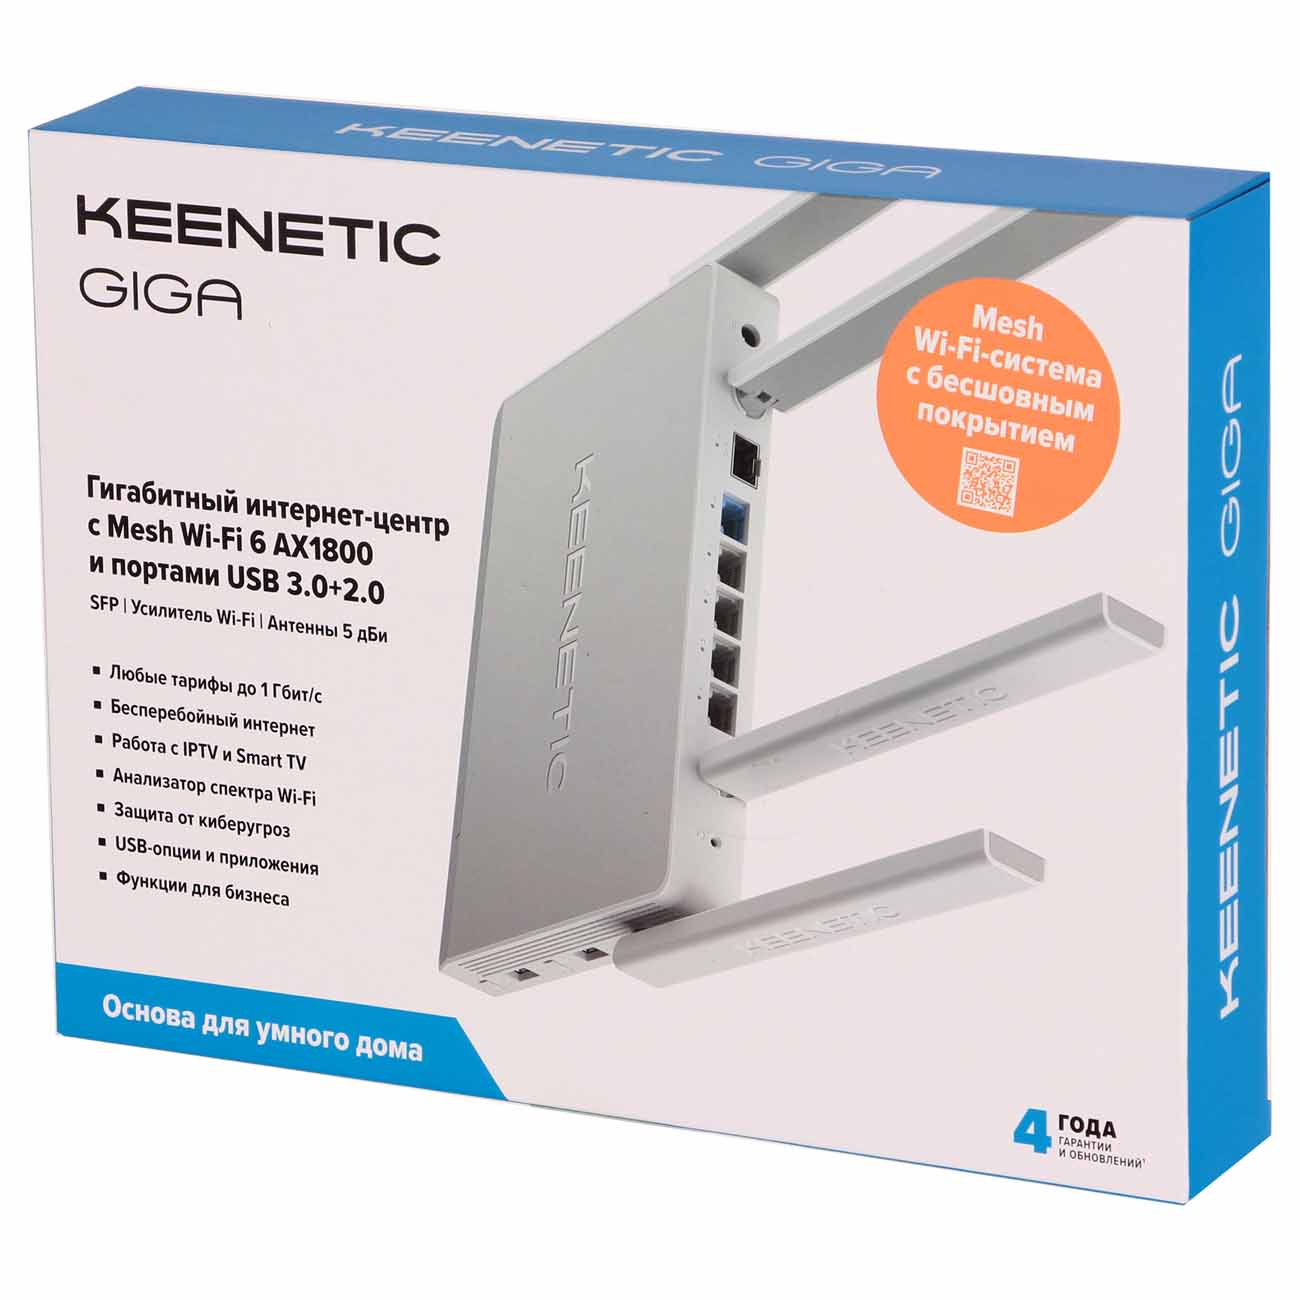 Купить роутер keenetic giga. Wi-Fi роутер Keenetic Giga (KN-1011). Wi-Fi роутер Keenetic Giga (KN-1011) ax1800. KN-Keenetic Giga (KN-1011). Wi-Fi роутер Keenetic Giga, ax1800, белый [KN-1011].